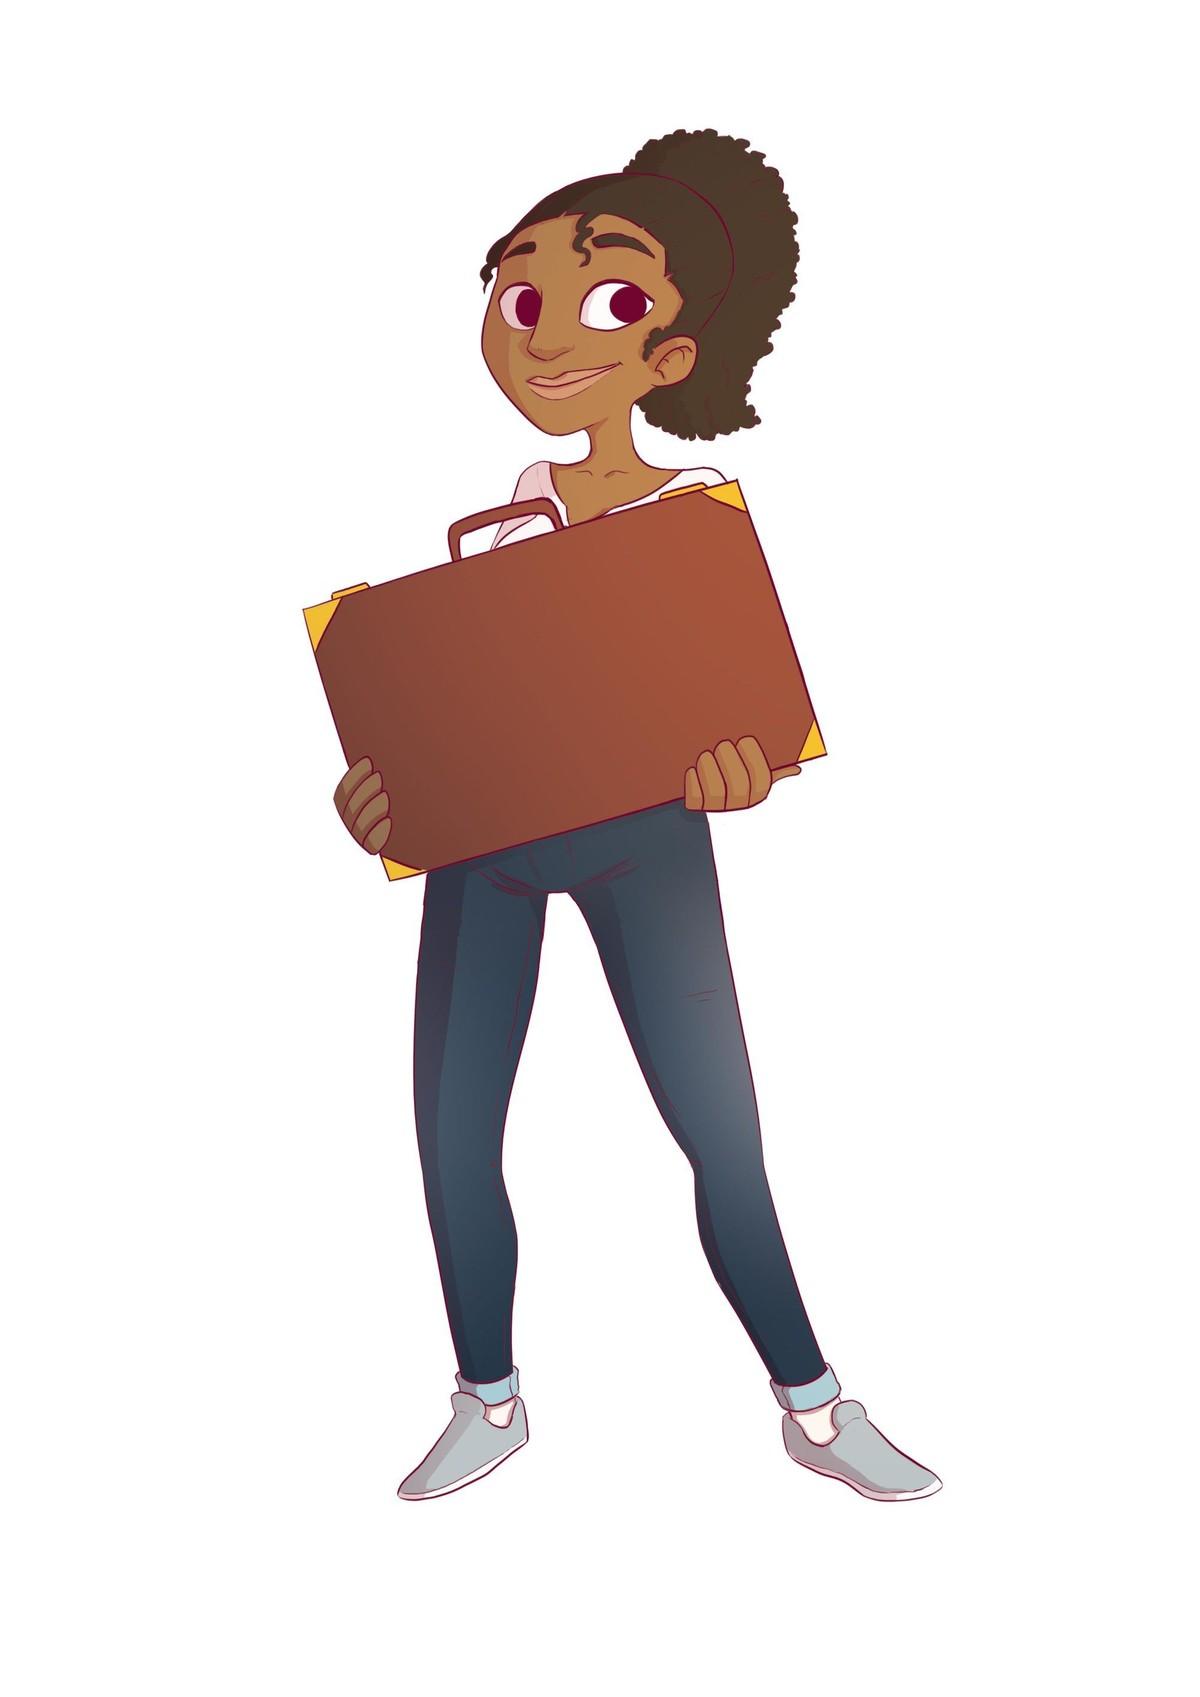 A borwn hair girl hold a brown suitcase